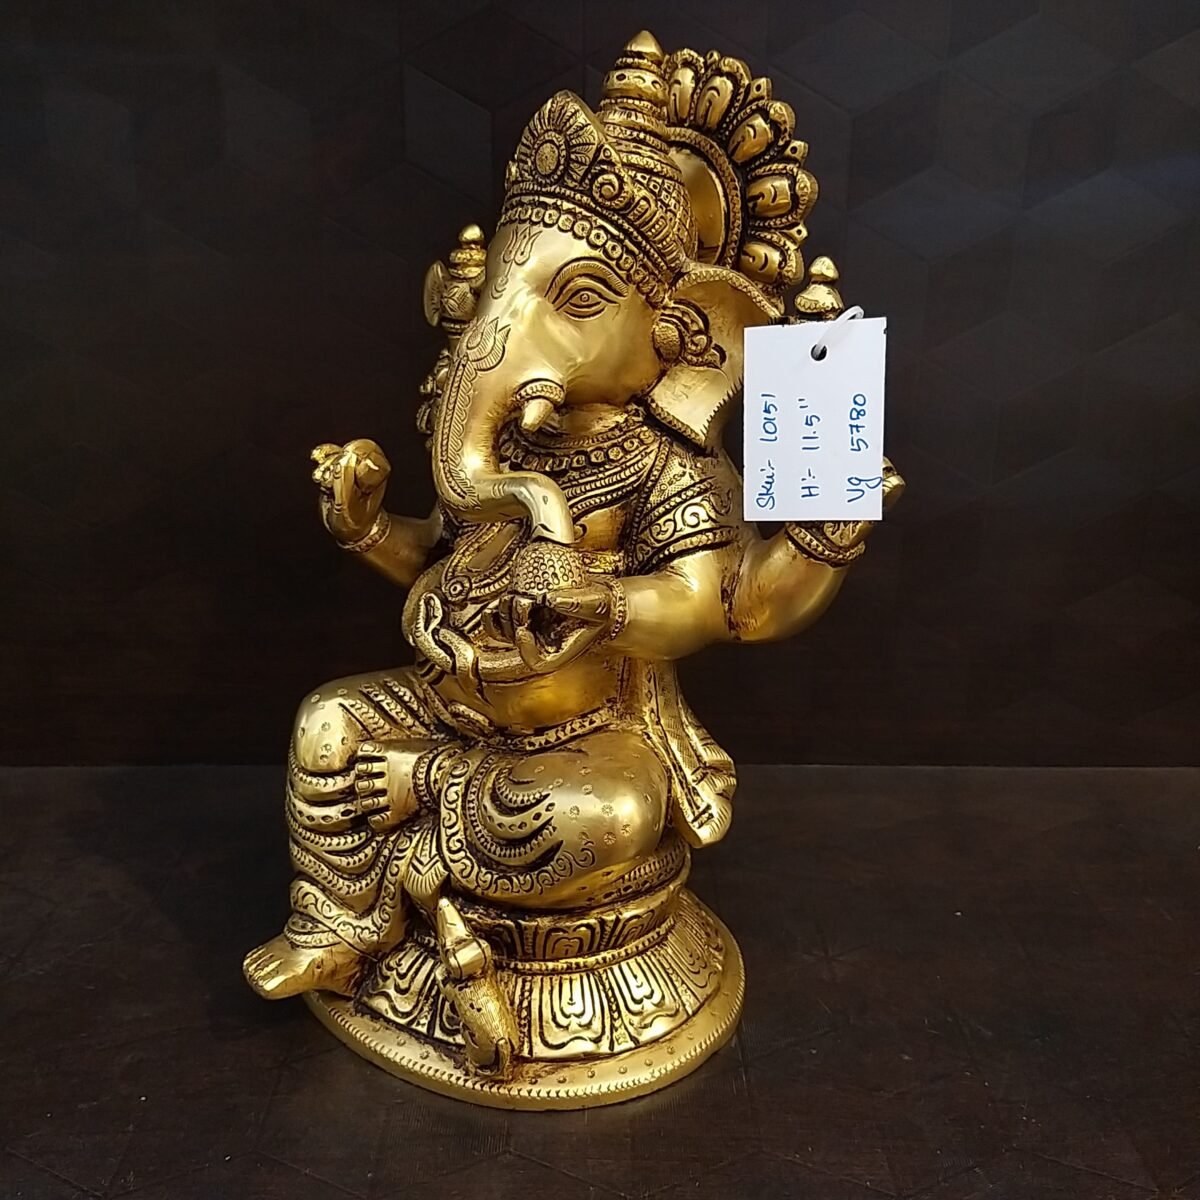 brass ganesha idol big home decor pooja items hindu god statues gift buy online india 10151 1 scaled